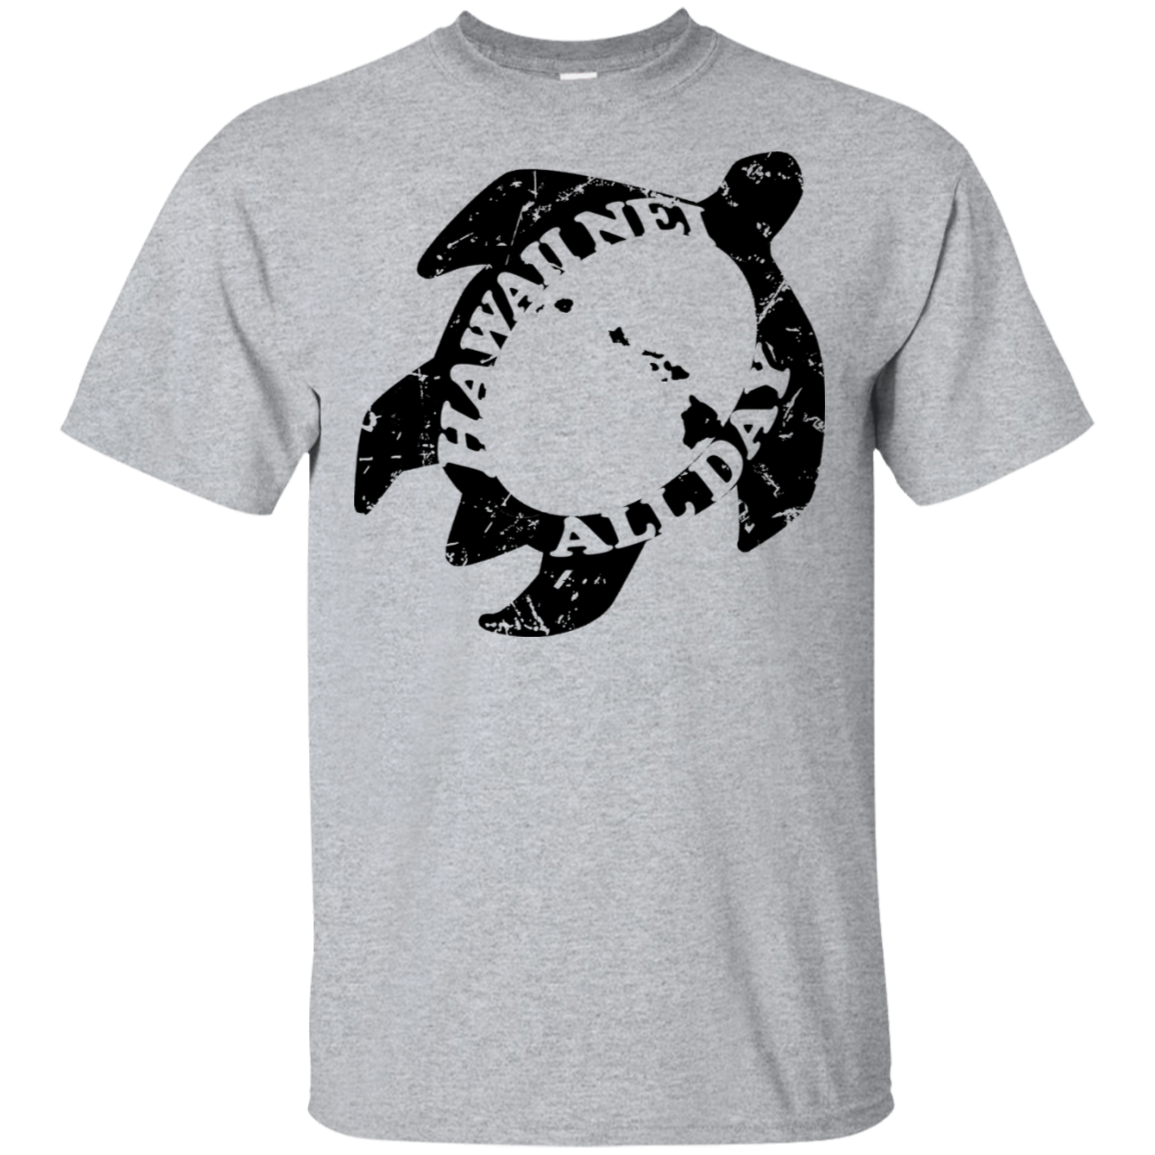 Honu Hawaiian Islands Distressed(black) Ultra Cotton T-Shirt, T-Shirts, Hawaii Nei All Day